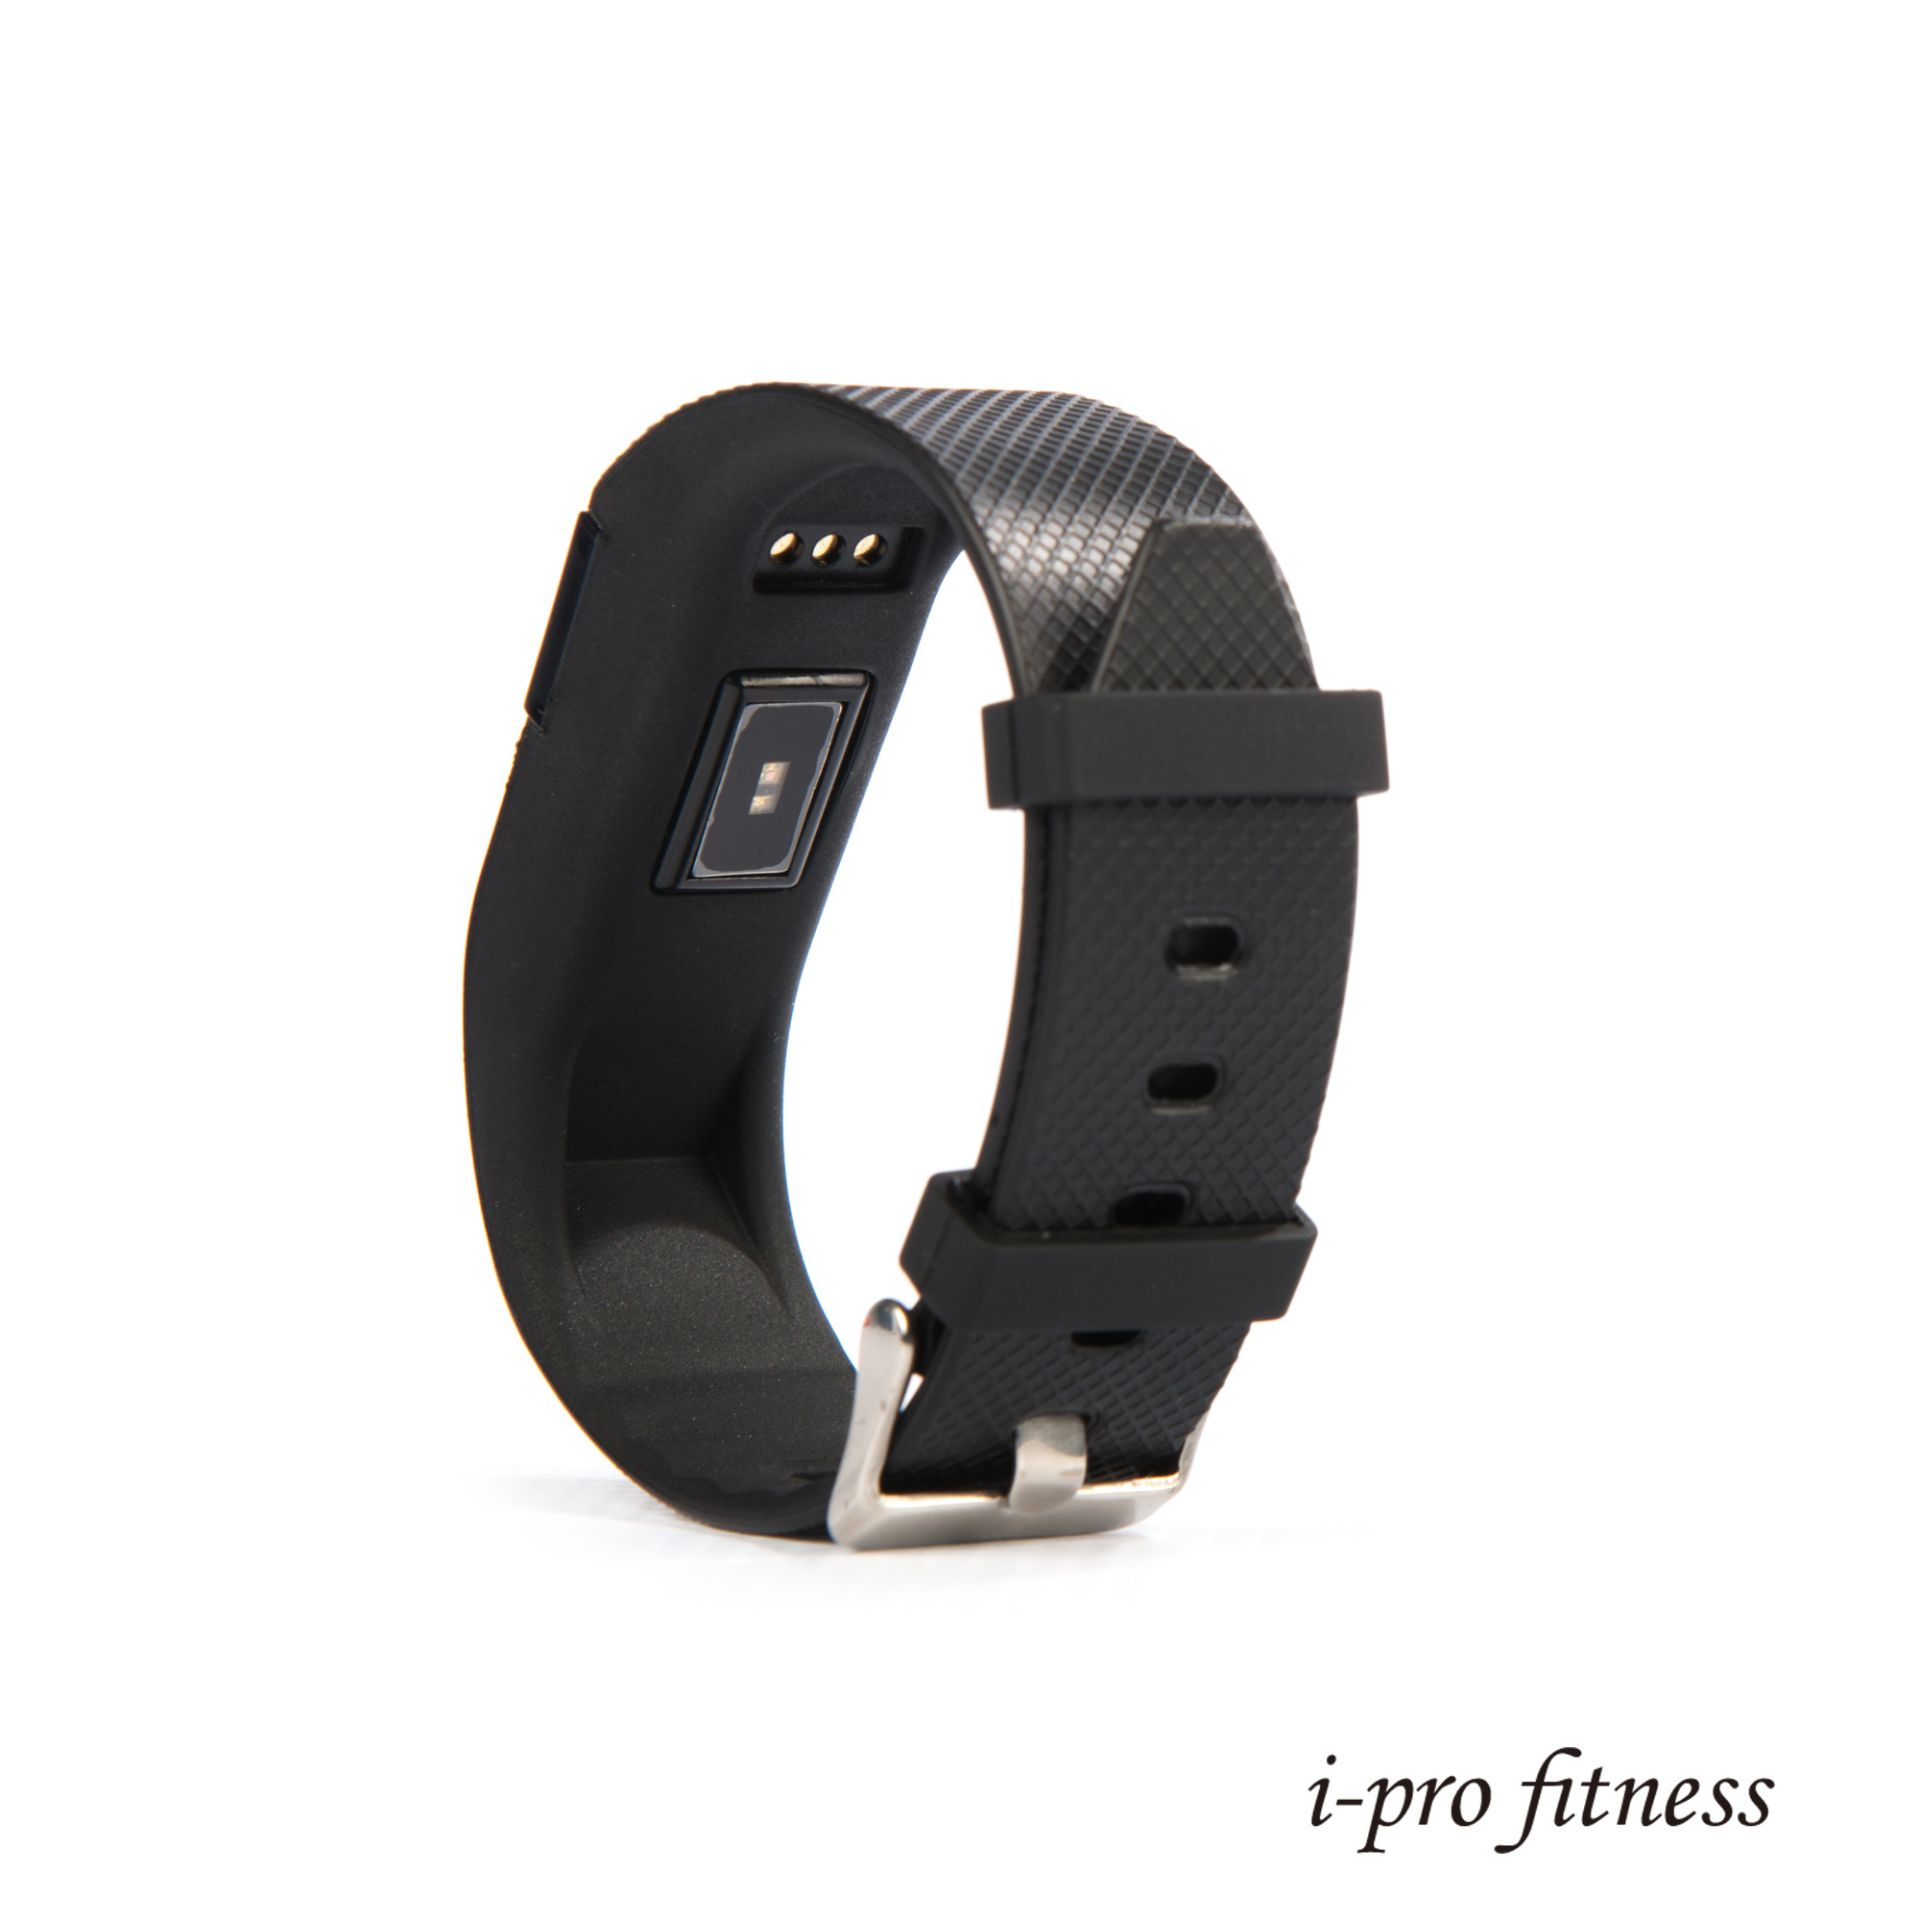 20x Fitness Tracker i-pro fitness, Bluetooth 4.0 Sports Smart Bracelet, Heart Rate Monitor - Image 8 of 8